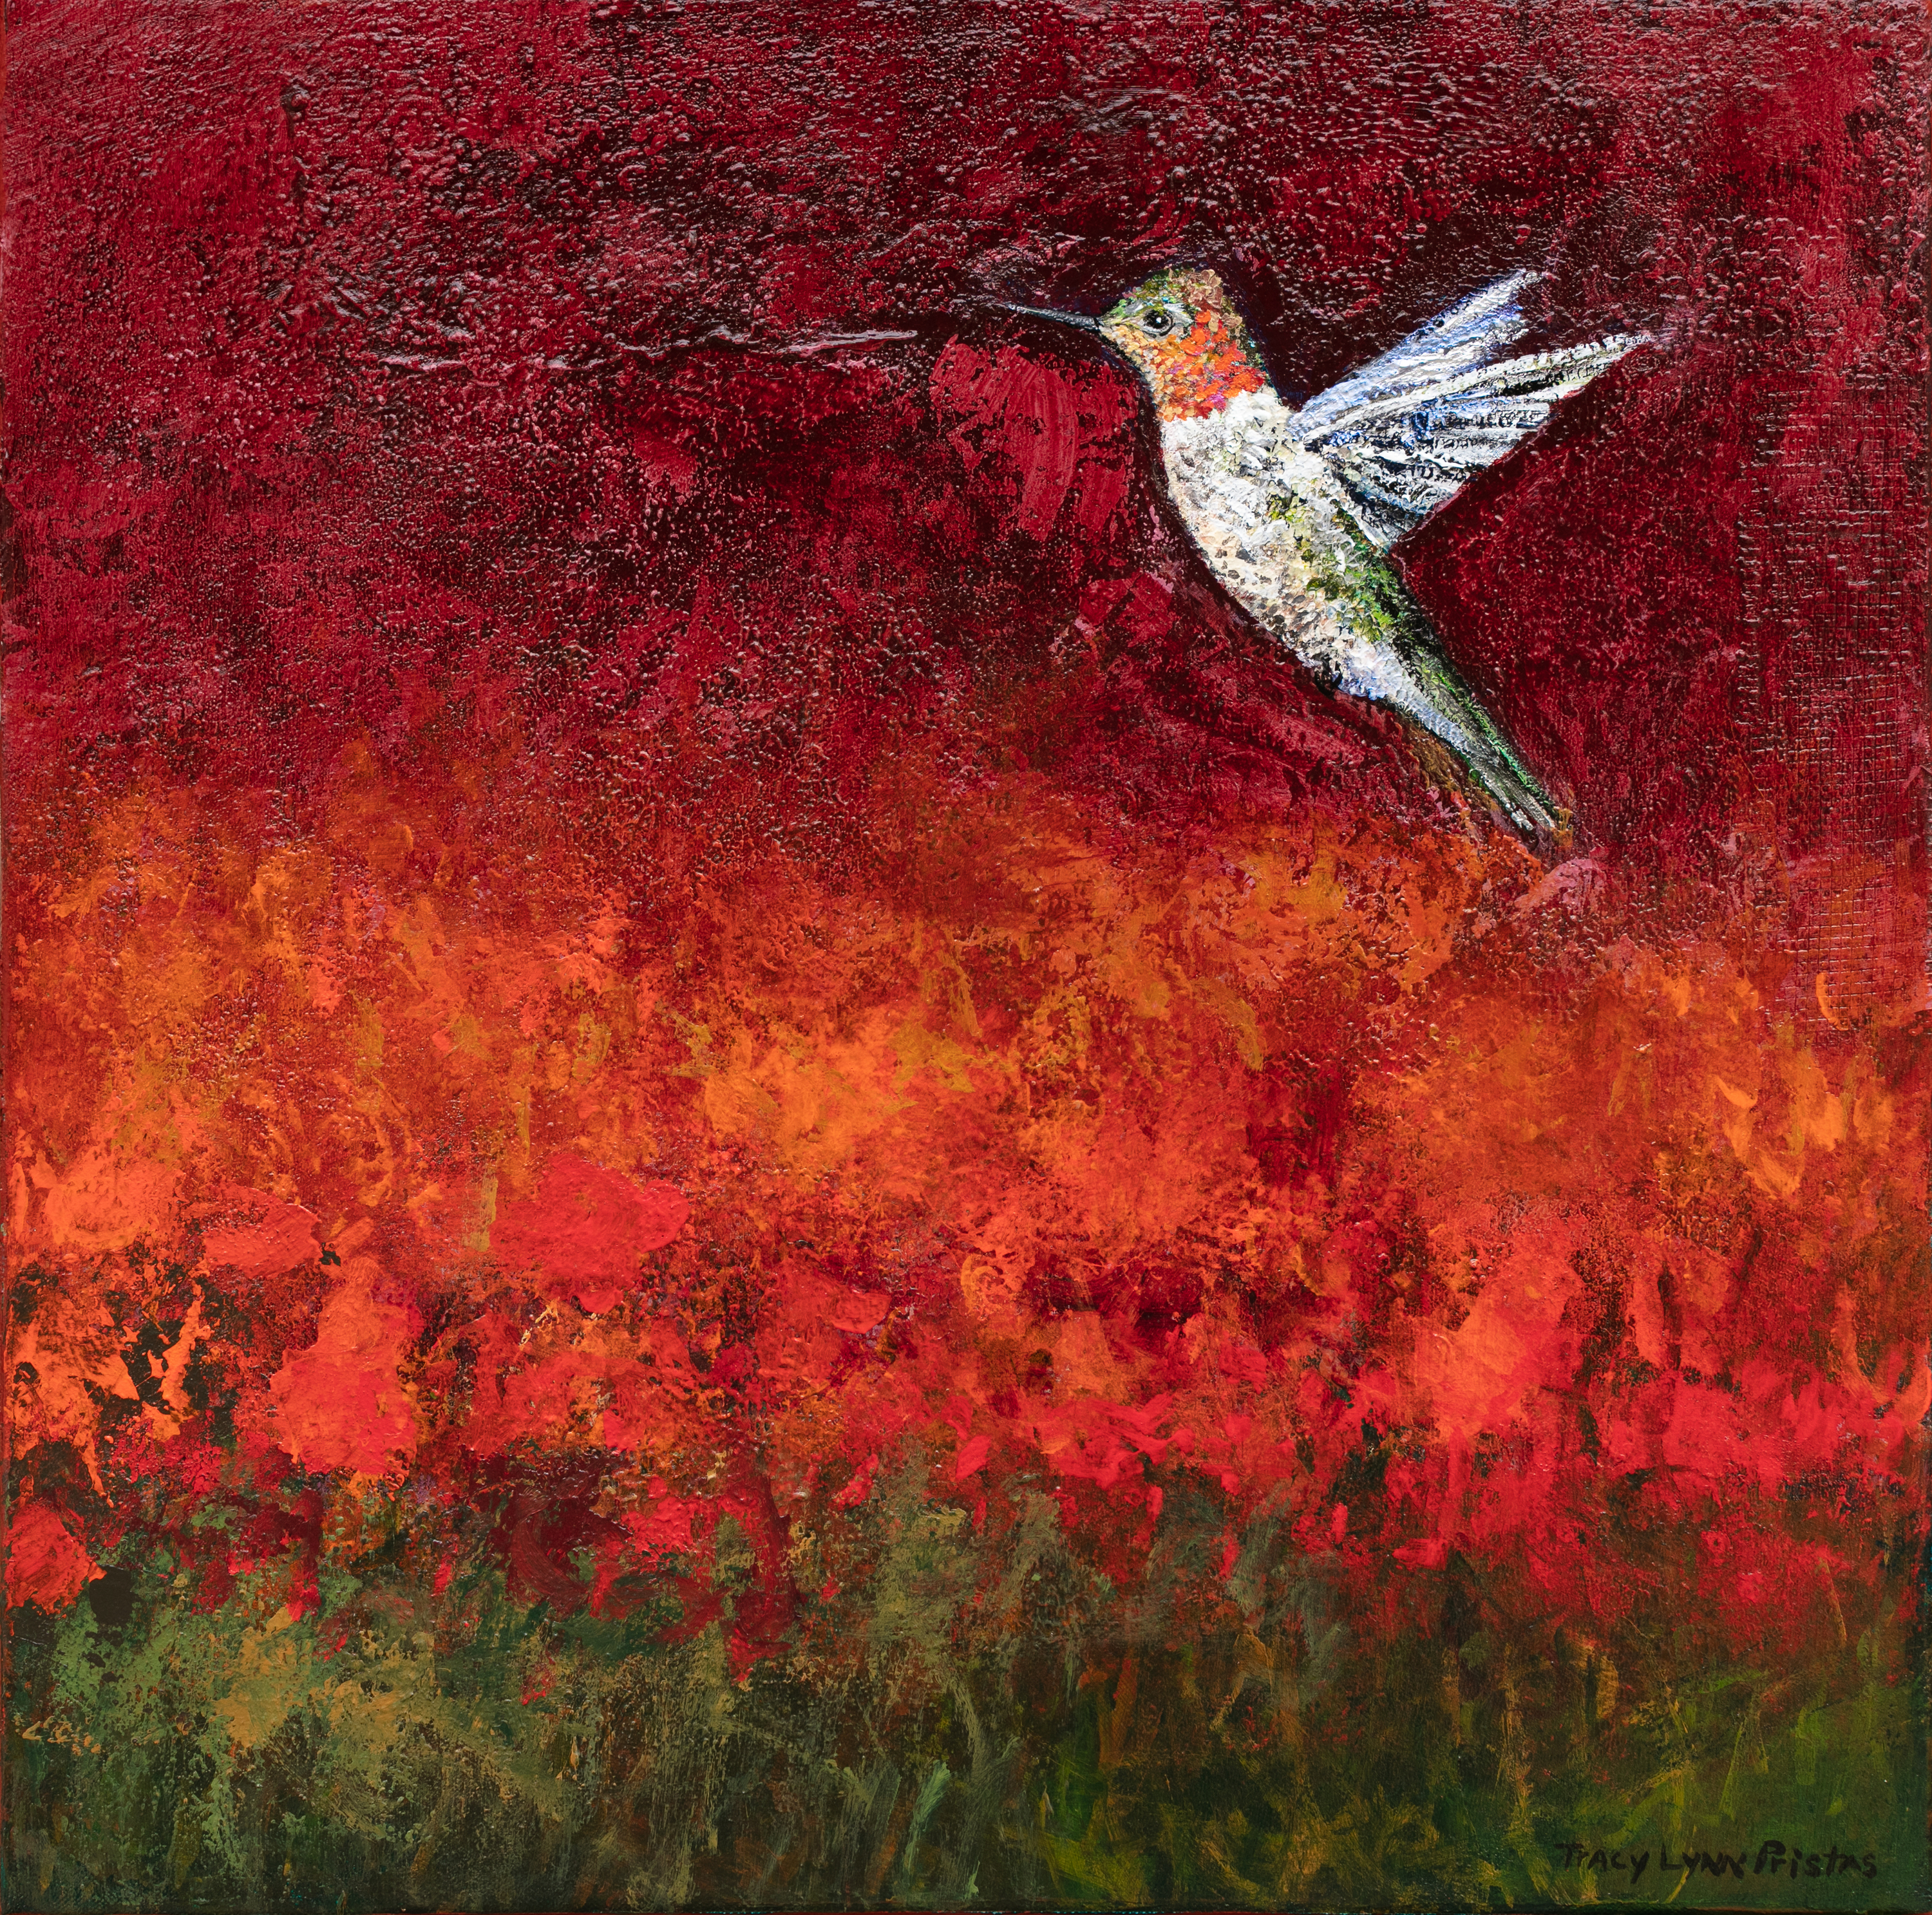 Red hummingbird paintings tracy lynn pristas hope feathers jpg nhbg7b